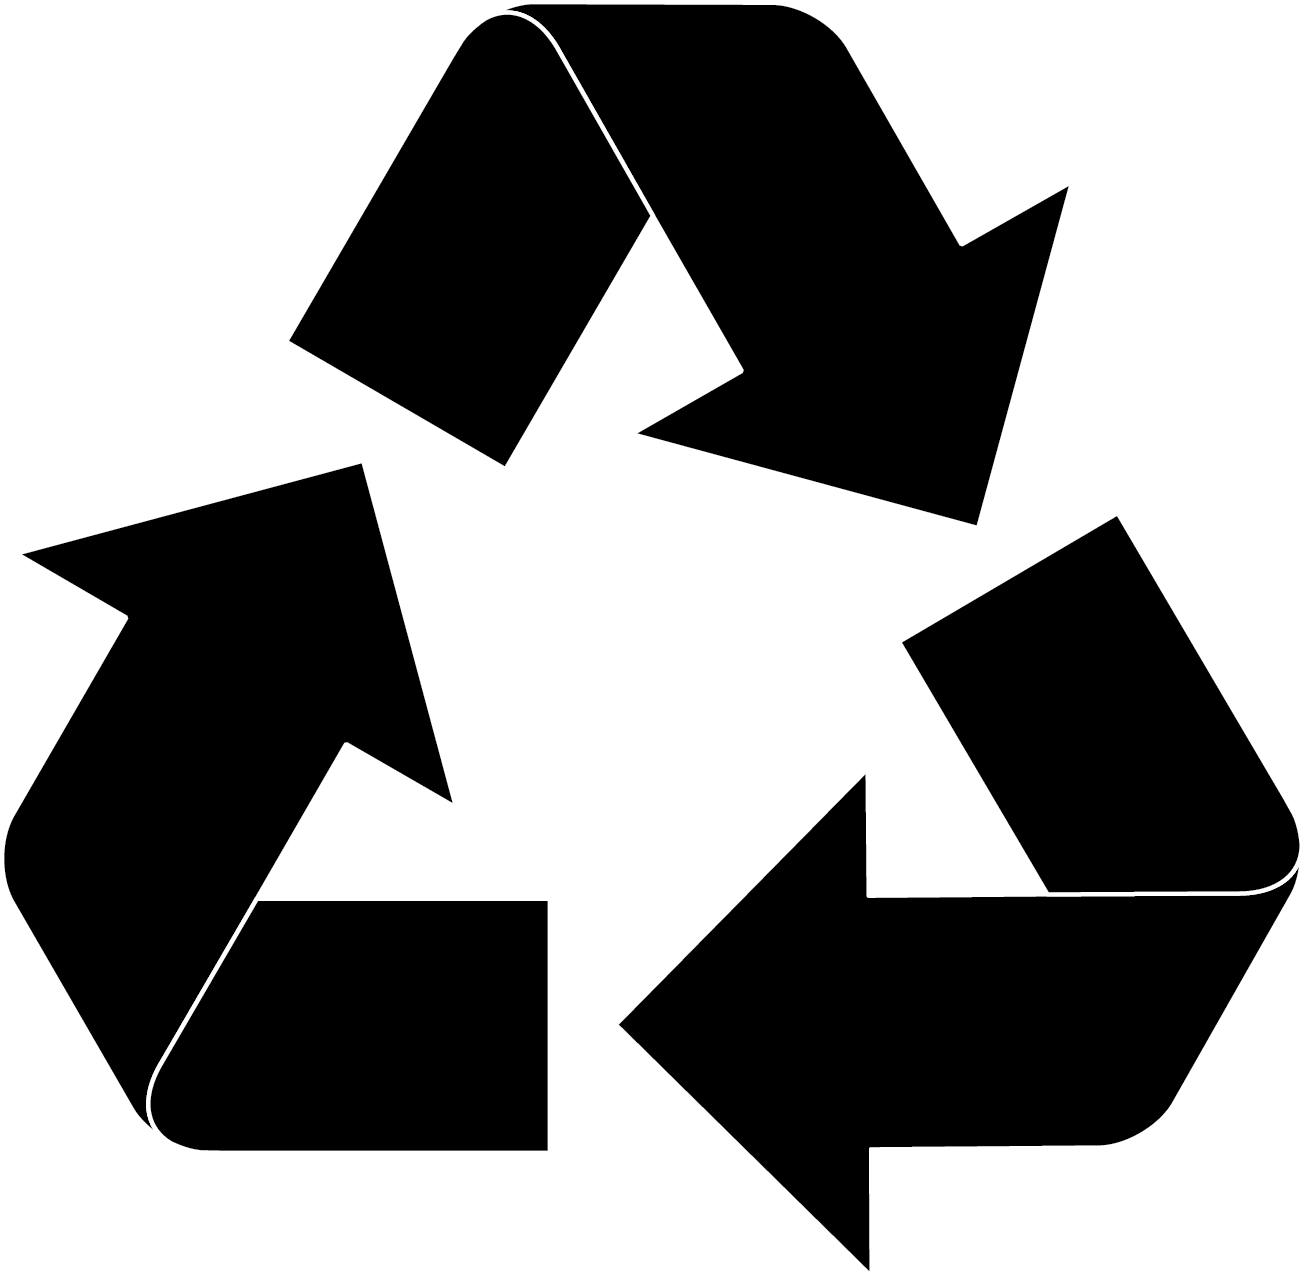 Winnipeg Should Scrap Recycling RFP